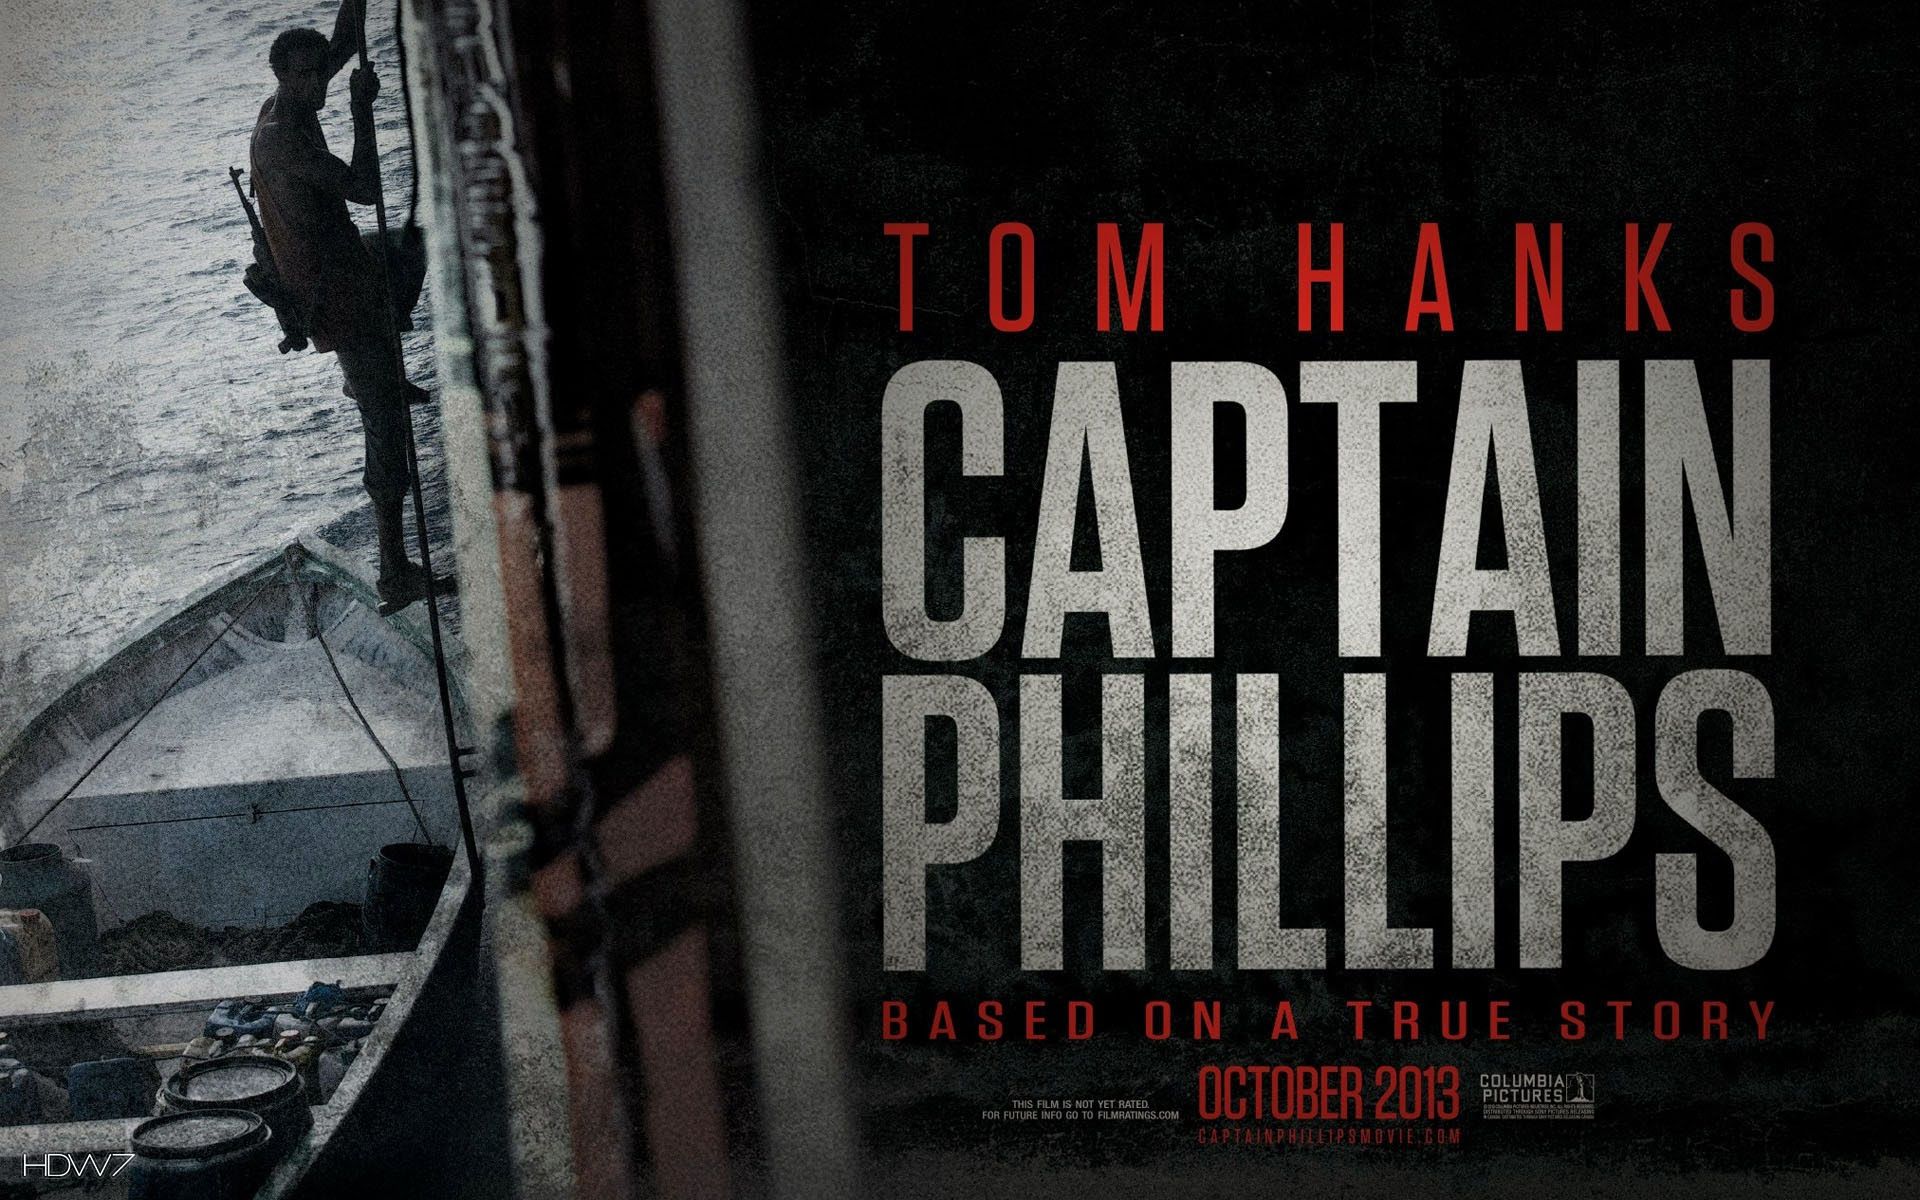 Captain Phillips Movie Poster